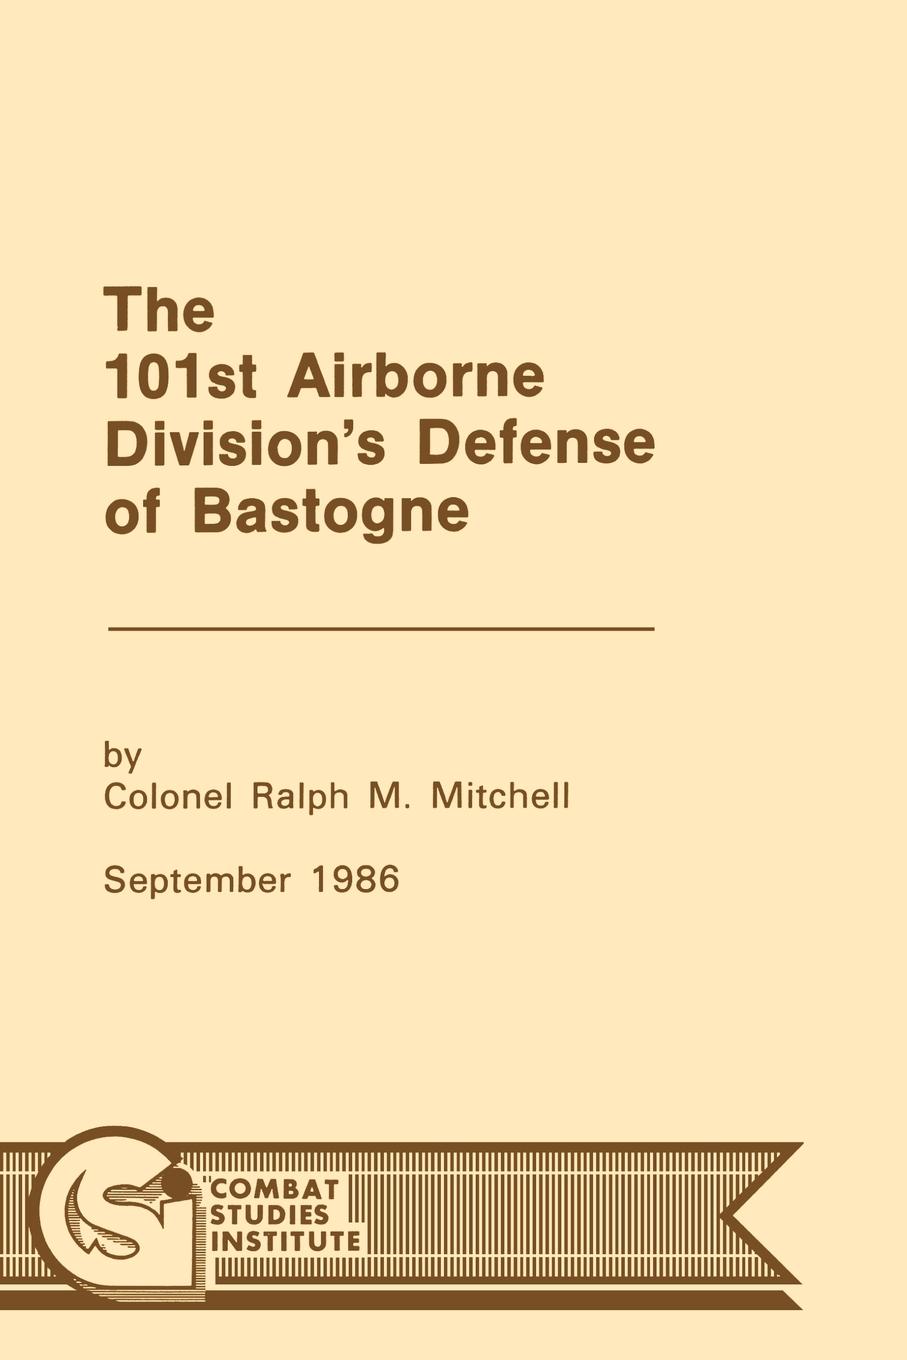 The 101st Airborne Division.s Defense at Bastogne